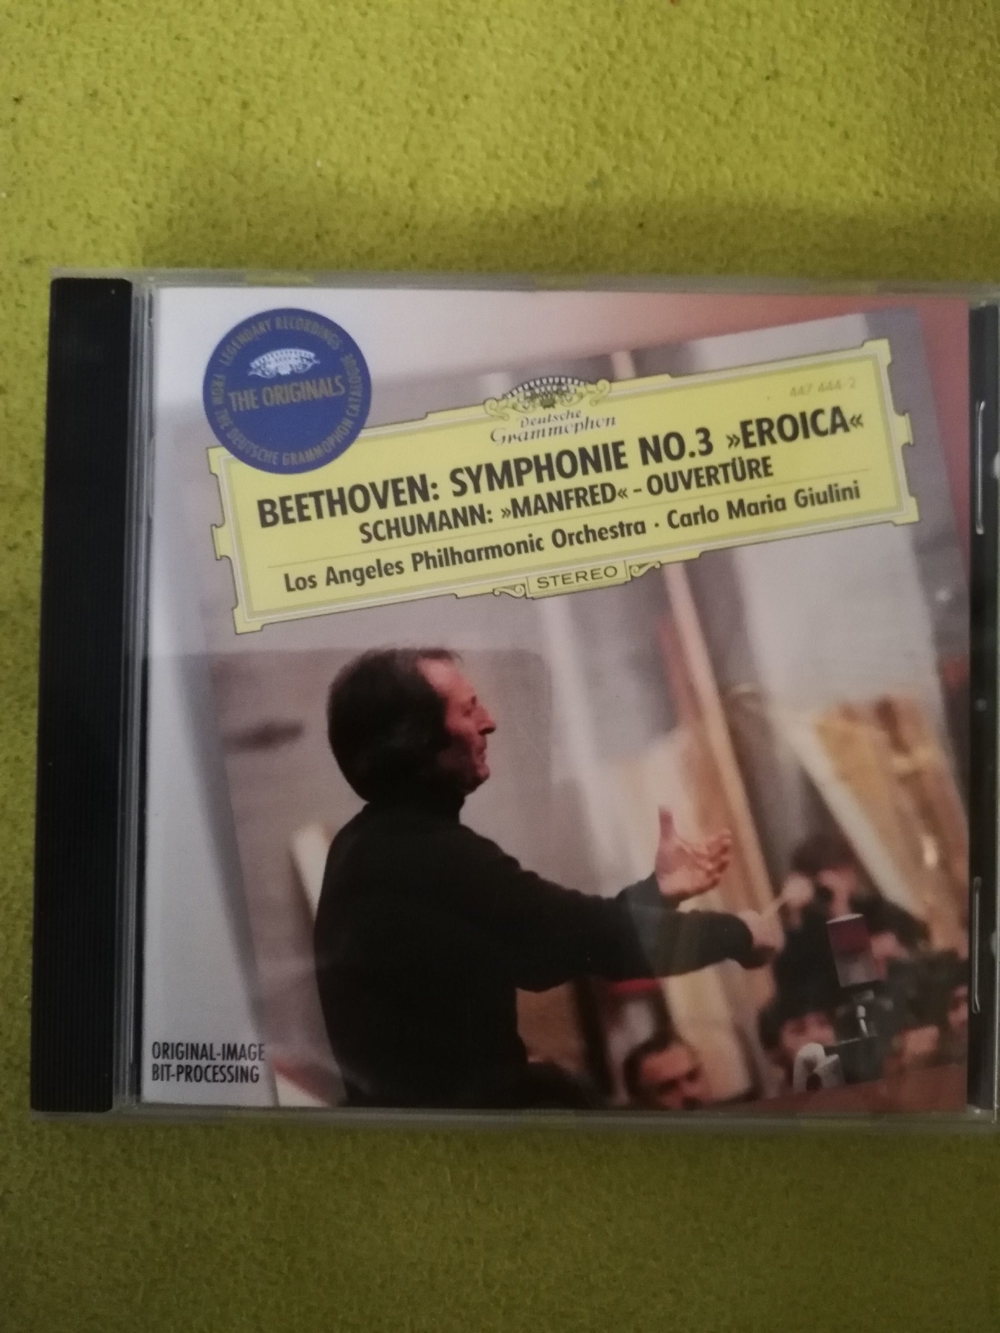 CD Beethoven Symphonie No 3 Eroica Schumann Manfred Ouvertüre